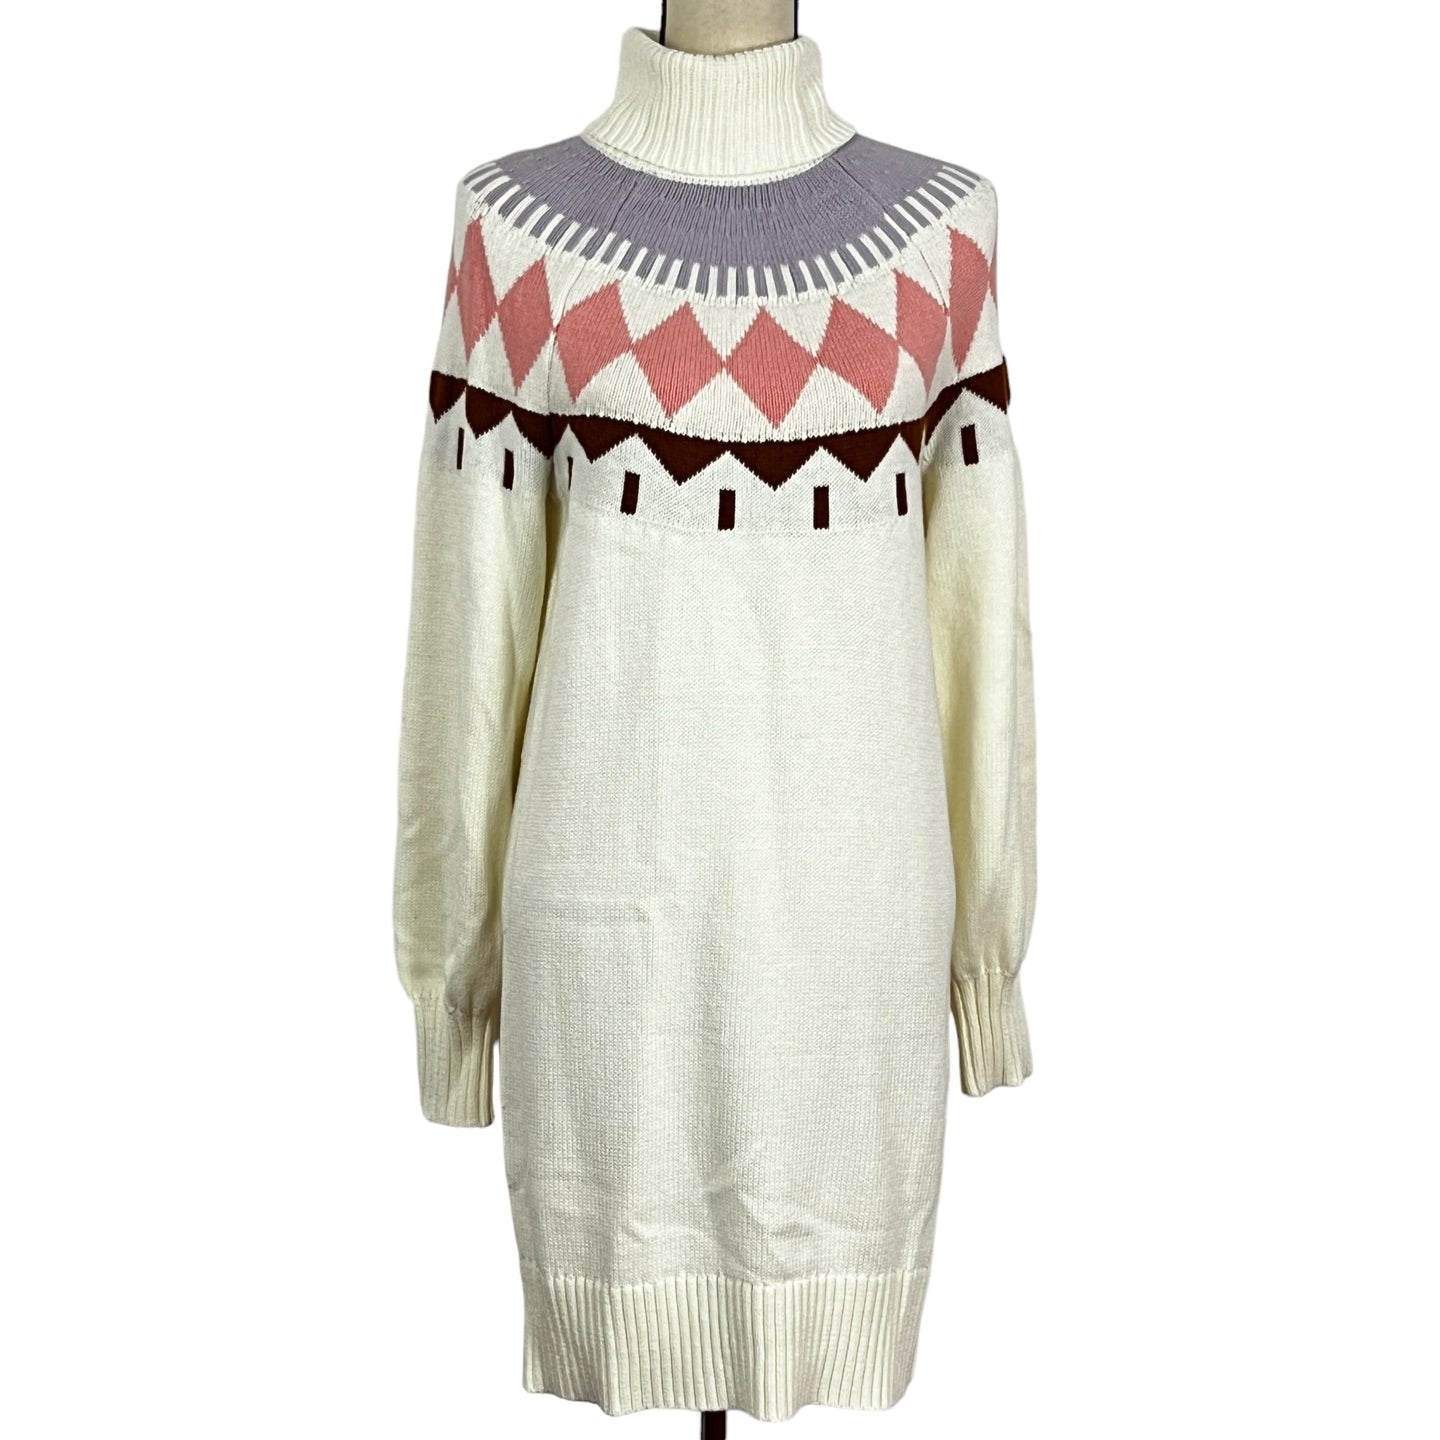 Fair Isle Cotton Wool Knit Turtleneck Sweater Dress Size Small